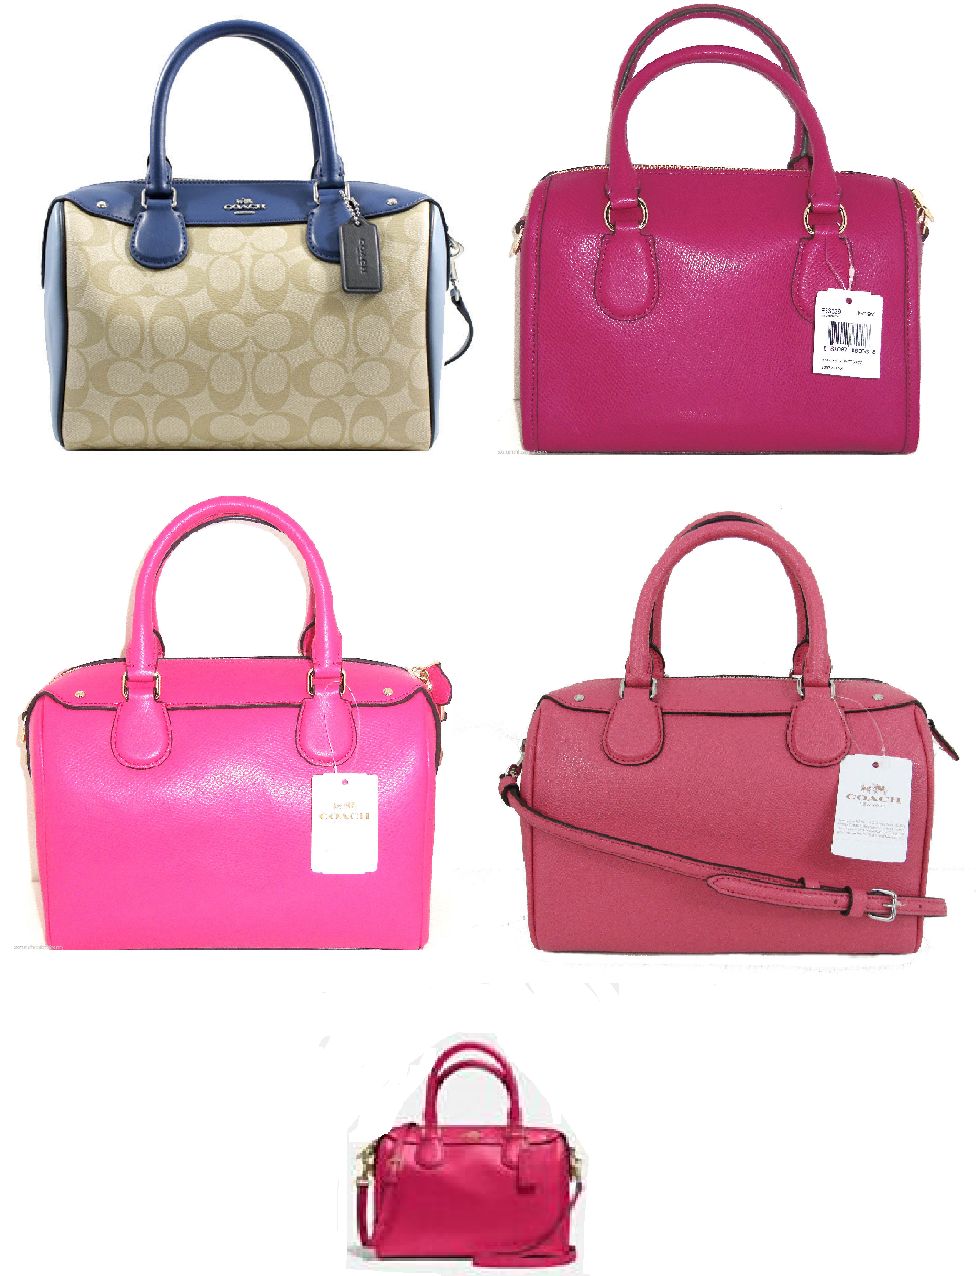 Coach Mini Bennett Bag Handbag Purse and similar items